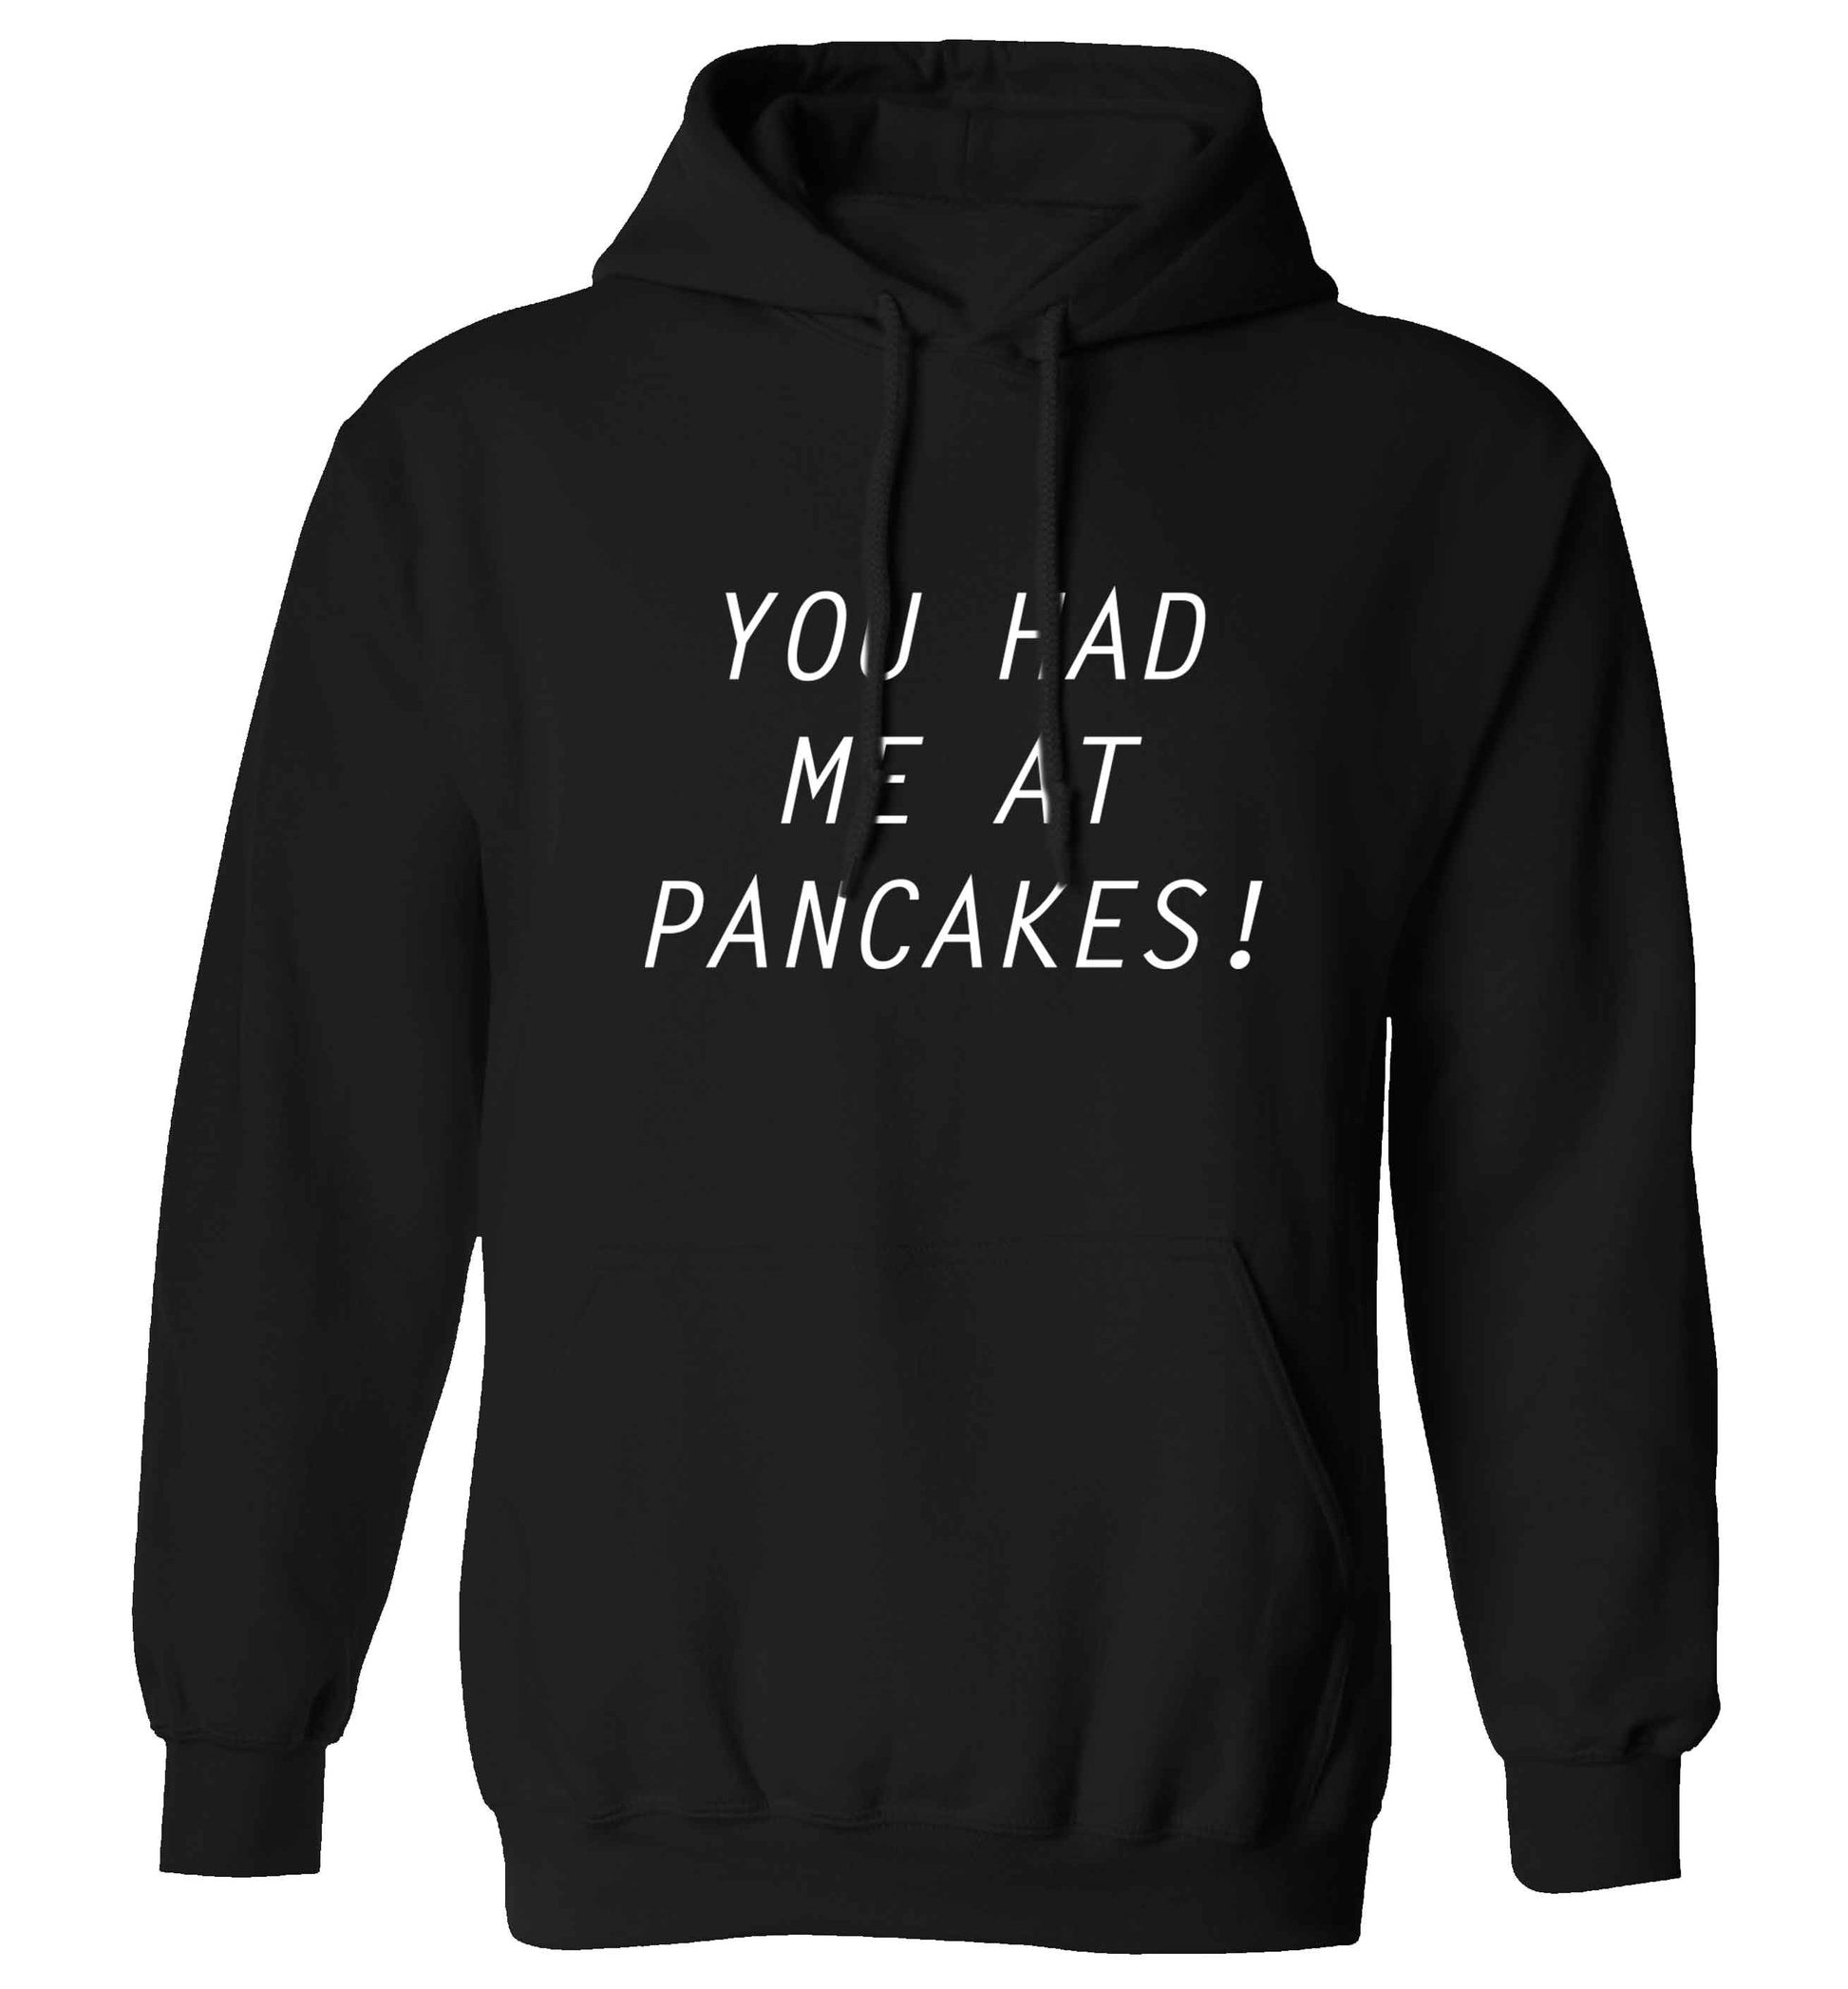 You had me at pancakes adults unisex black hoodie 2XL